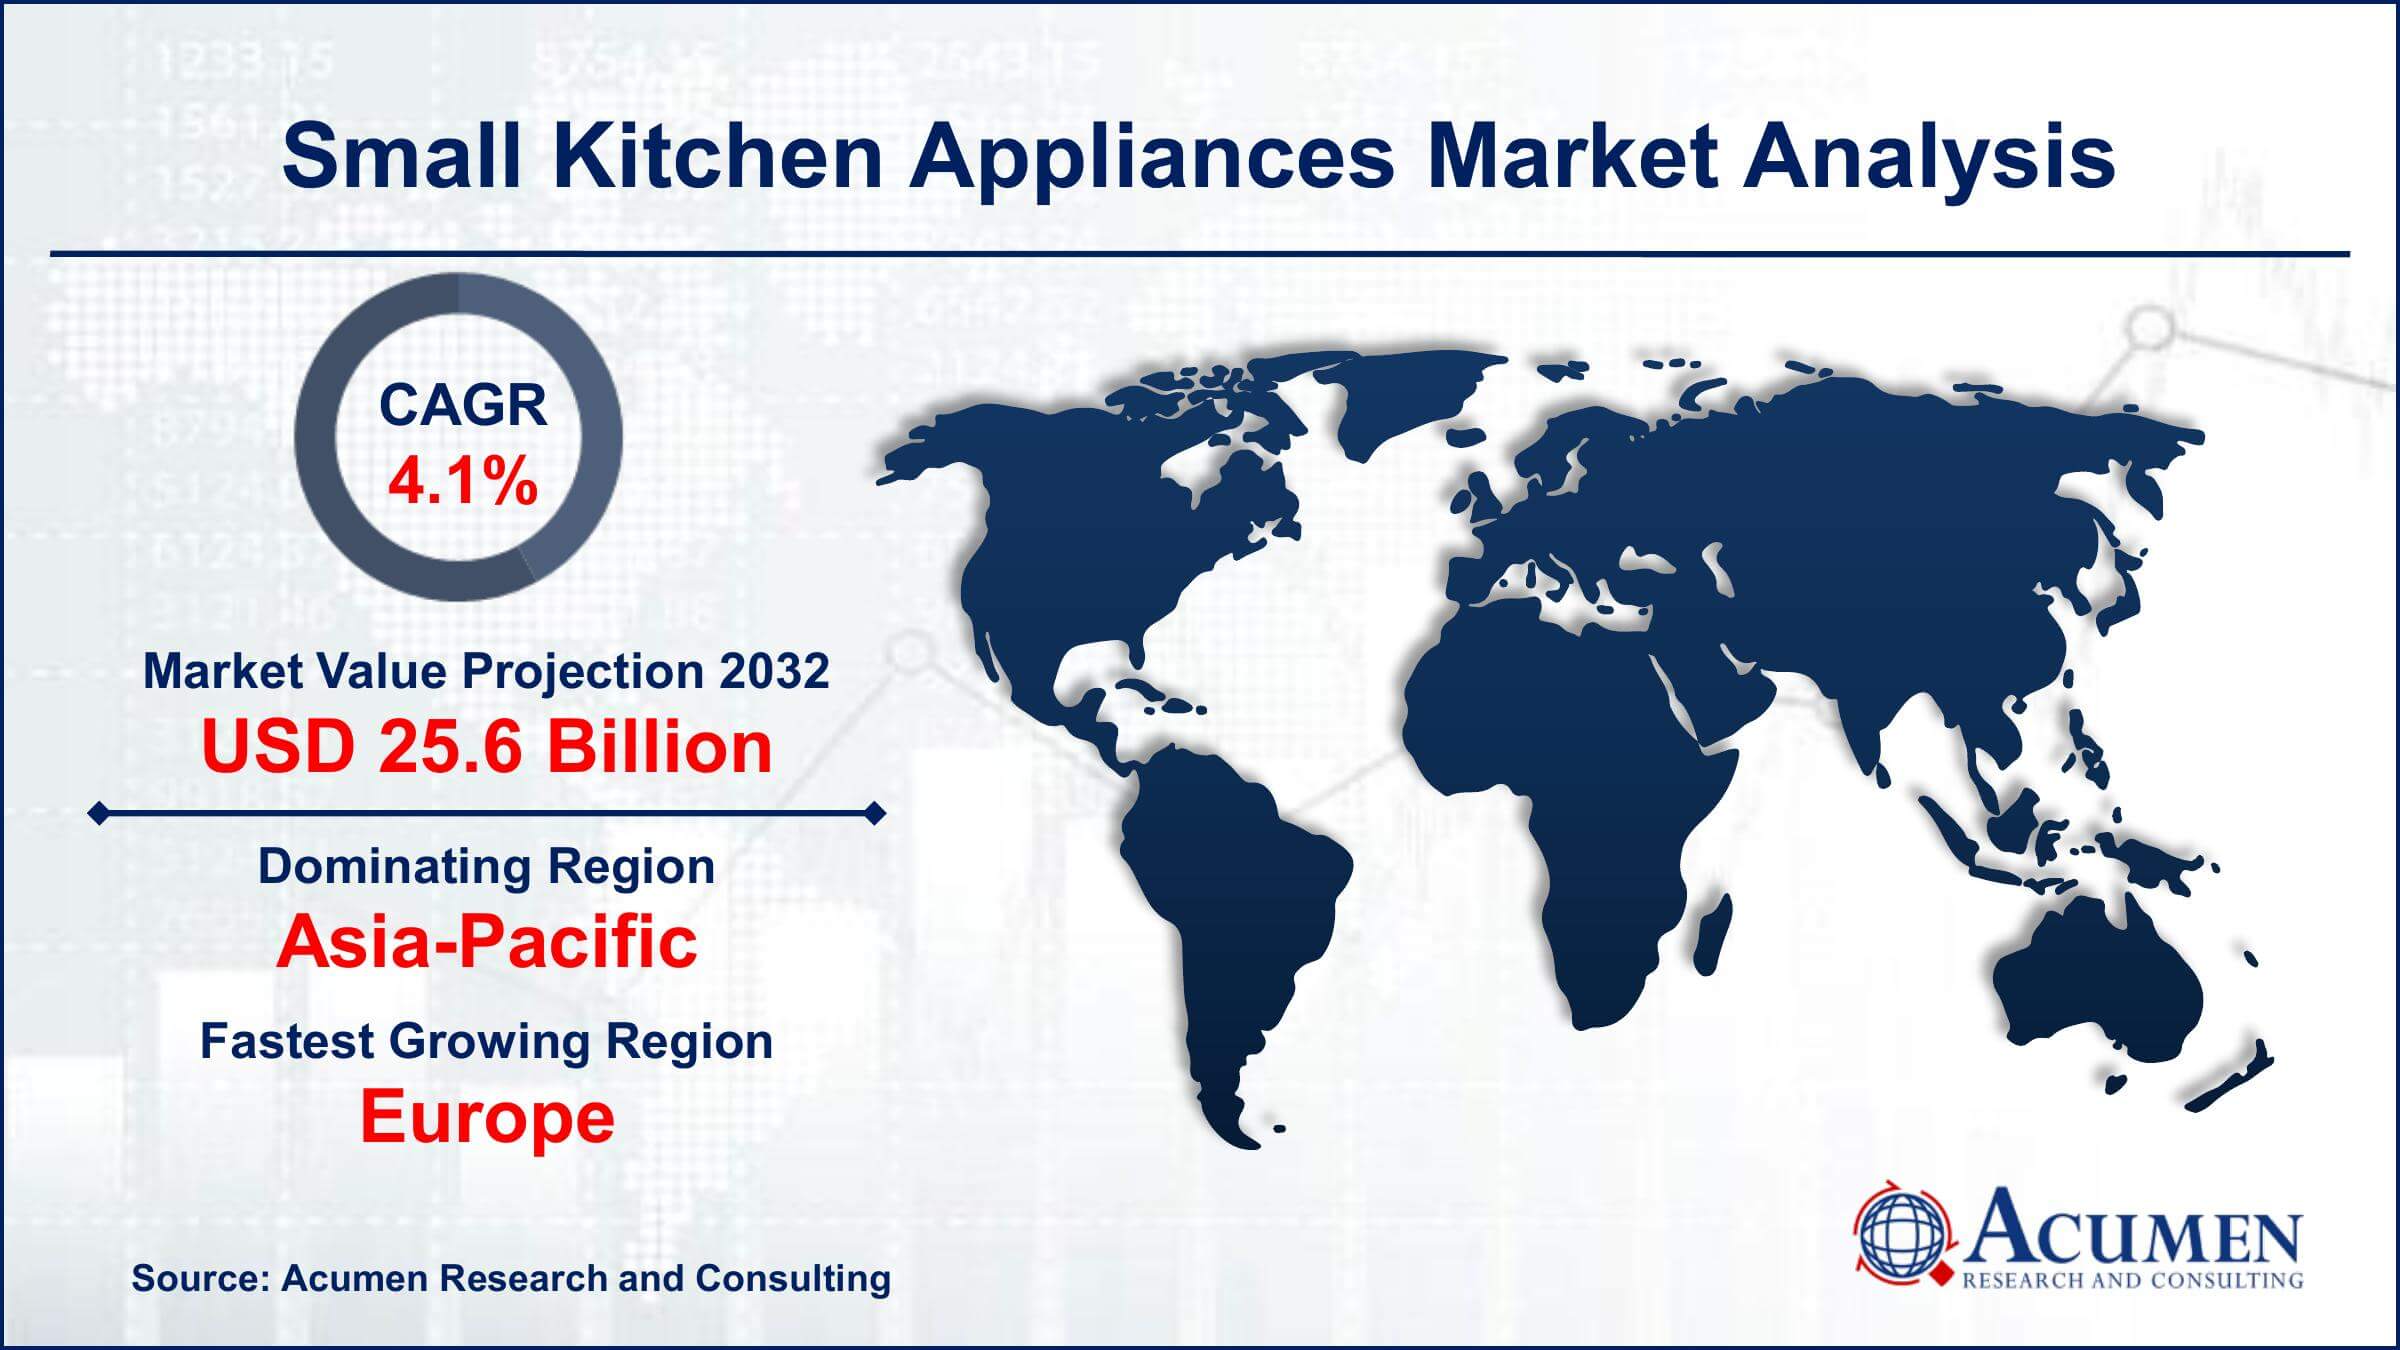 Small Kitchen Appliances Market Trends